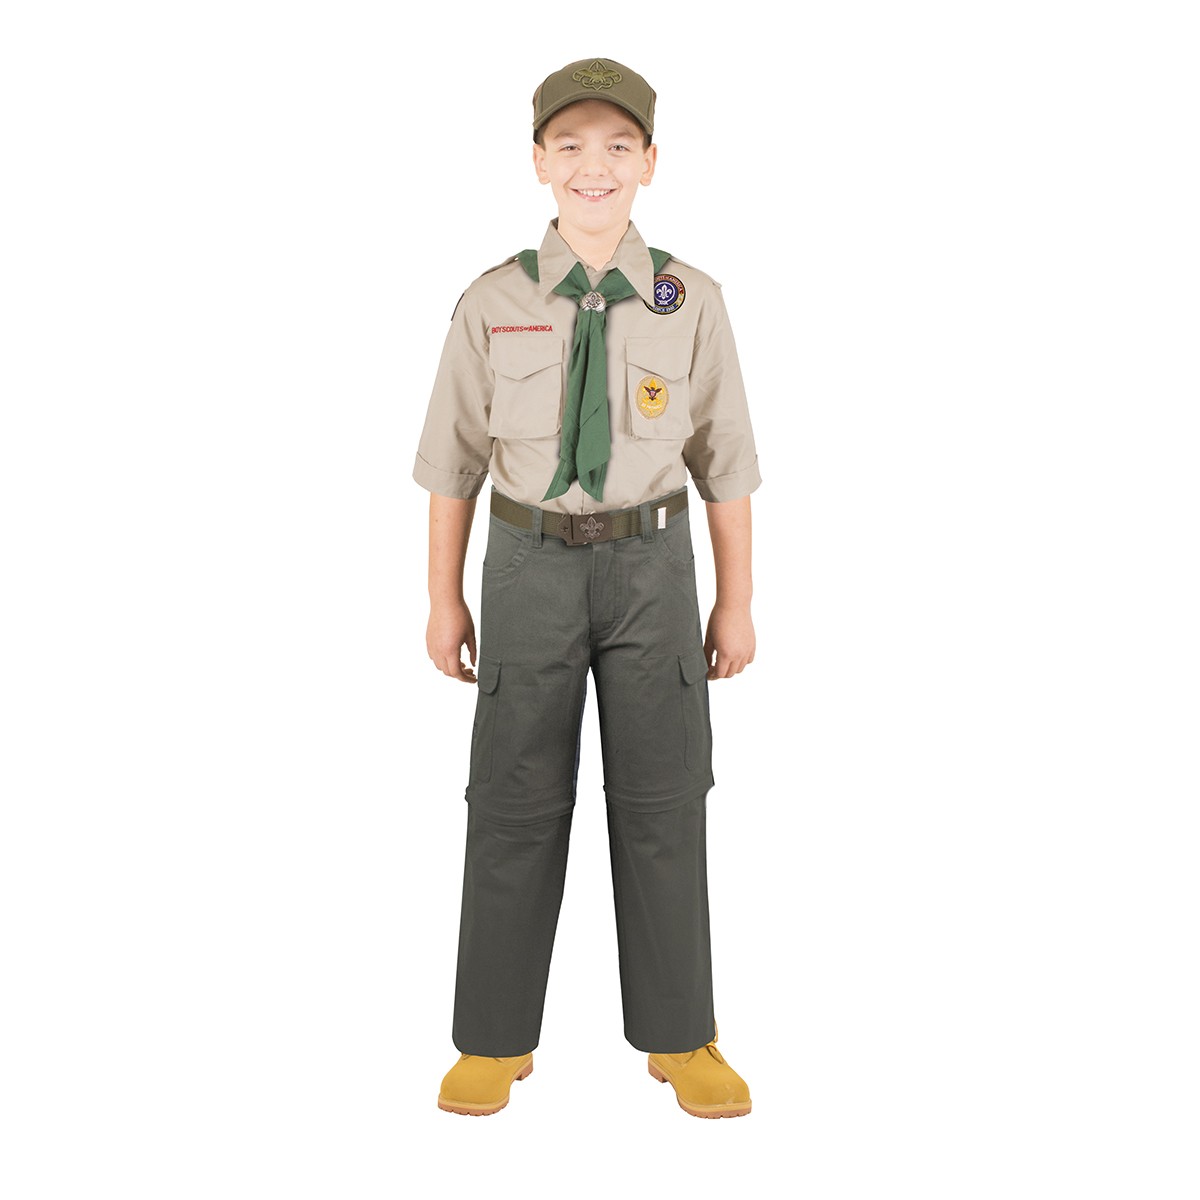 BSA Boy Scout 2st Scout Rank Patch Official Uniform Patch Current Girl